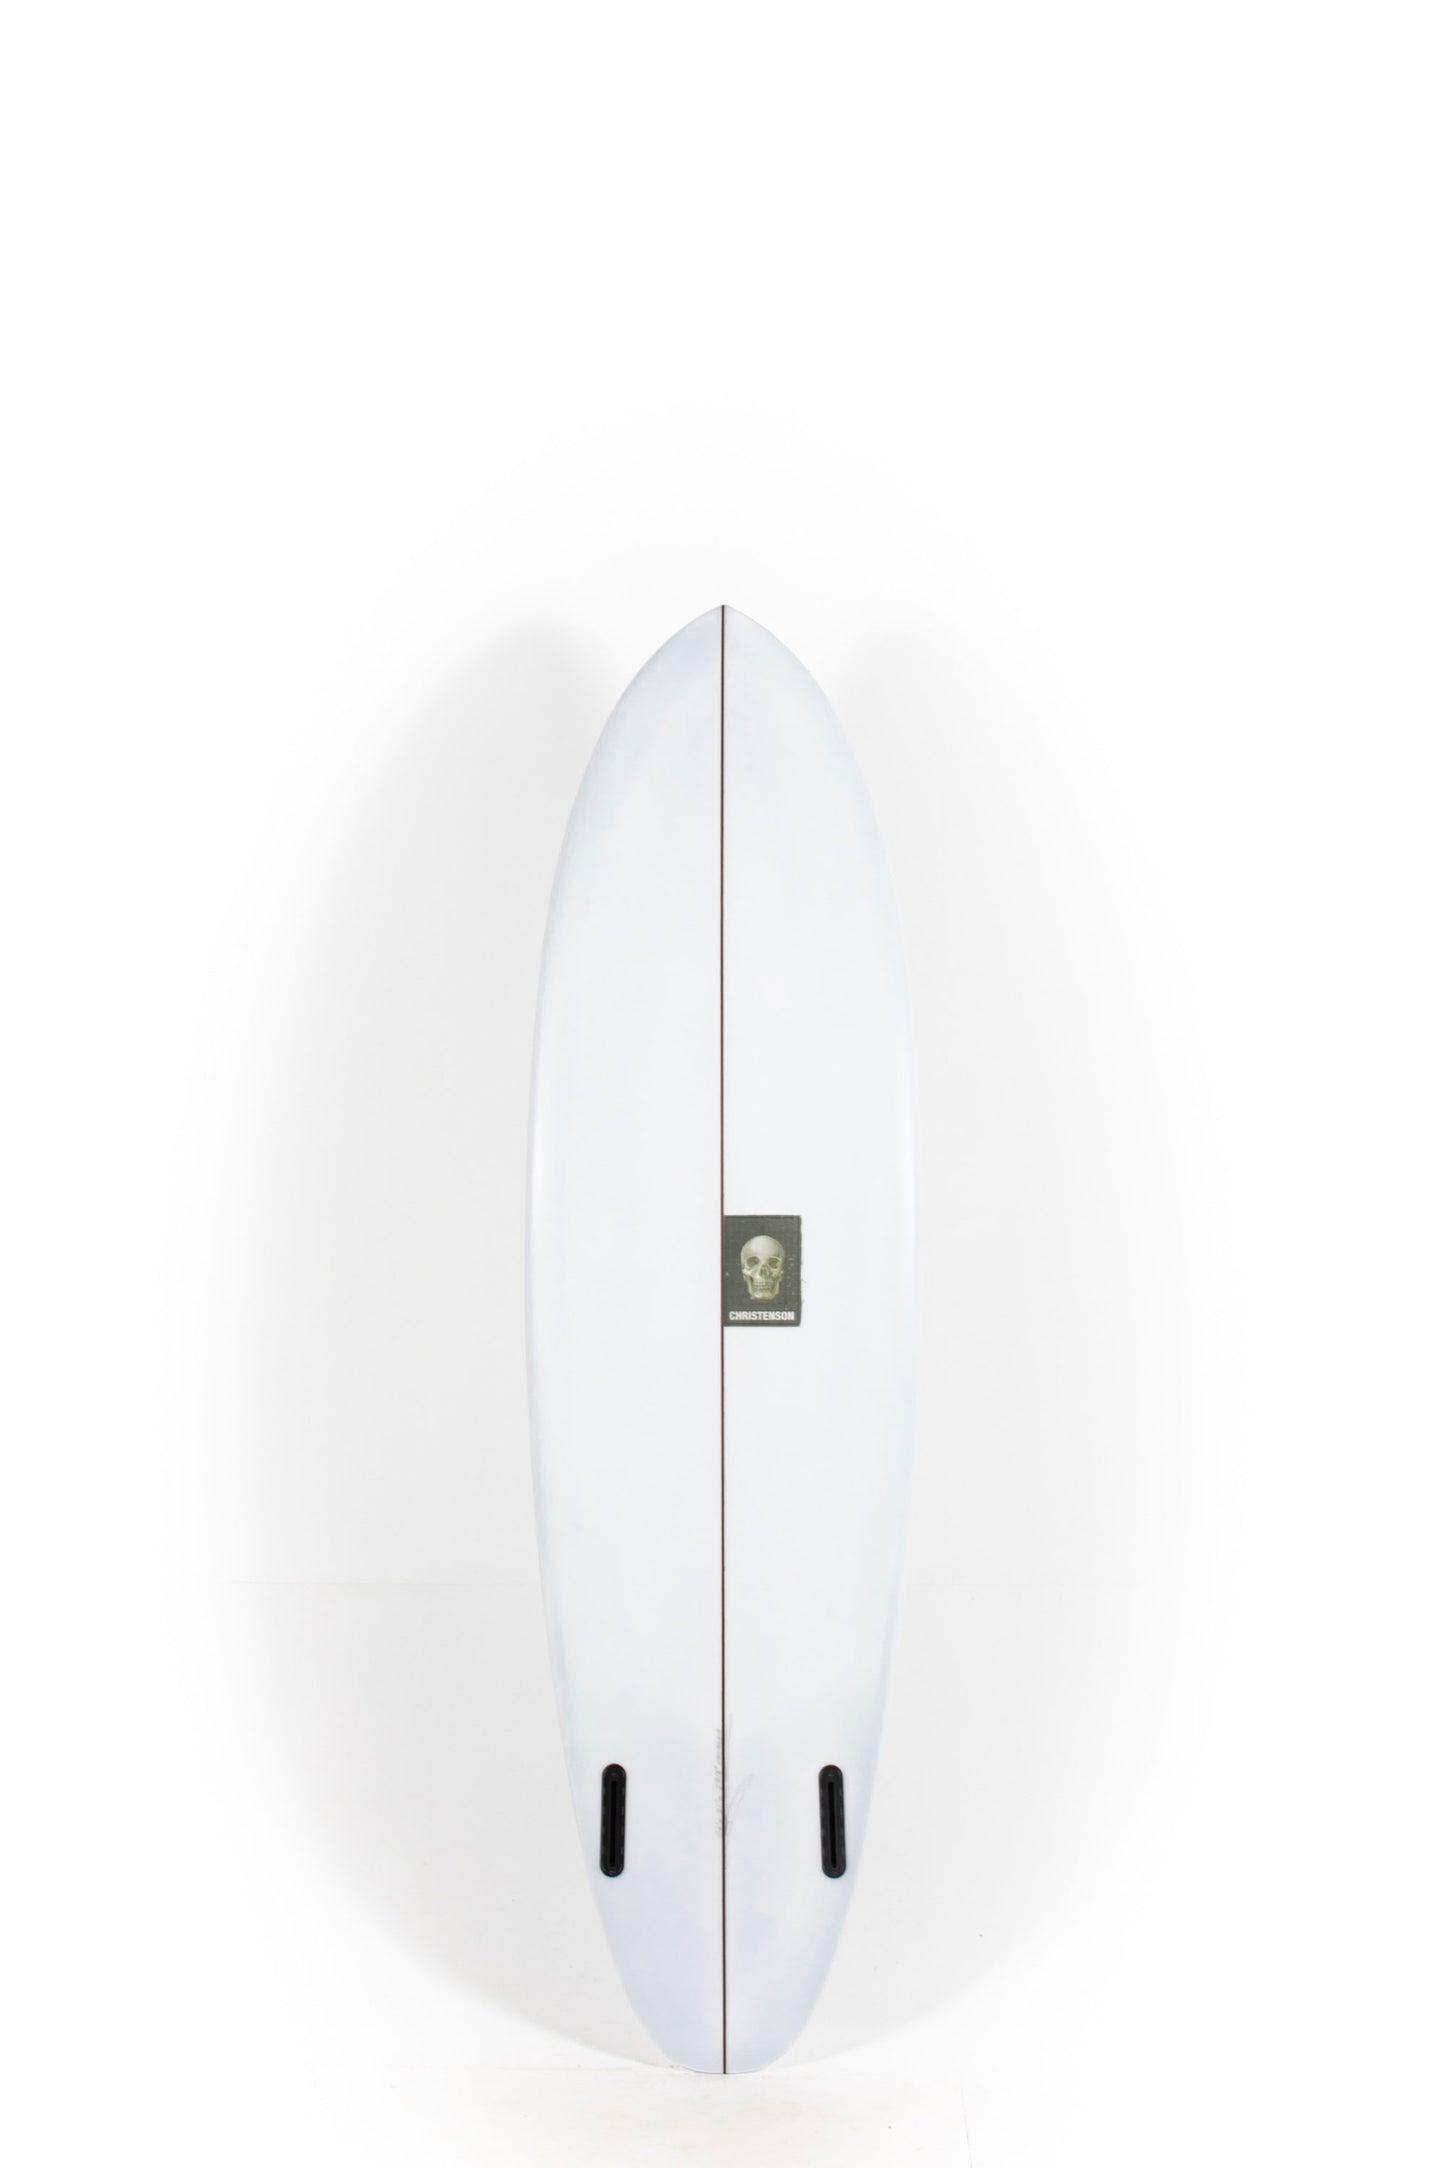 Pukas Surf Shop - Christenson Surfboards - TWIN TRACKER - 6'6" x 21 x 2 5/8 - CX03324